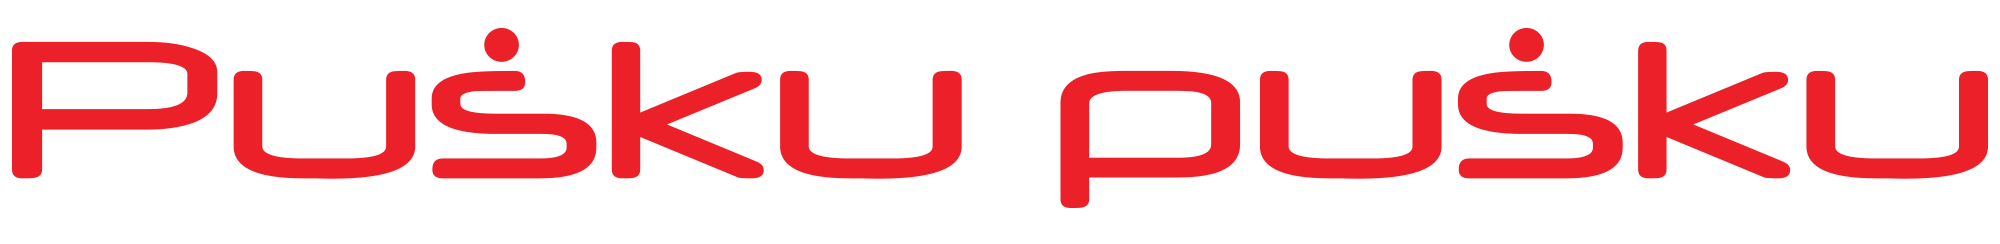 Pusku Pusku logo